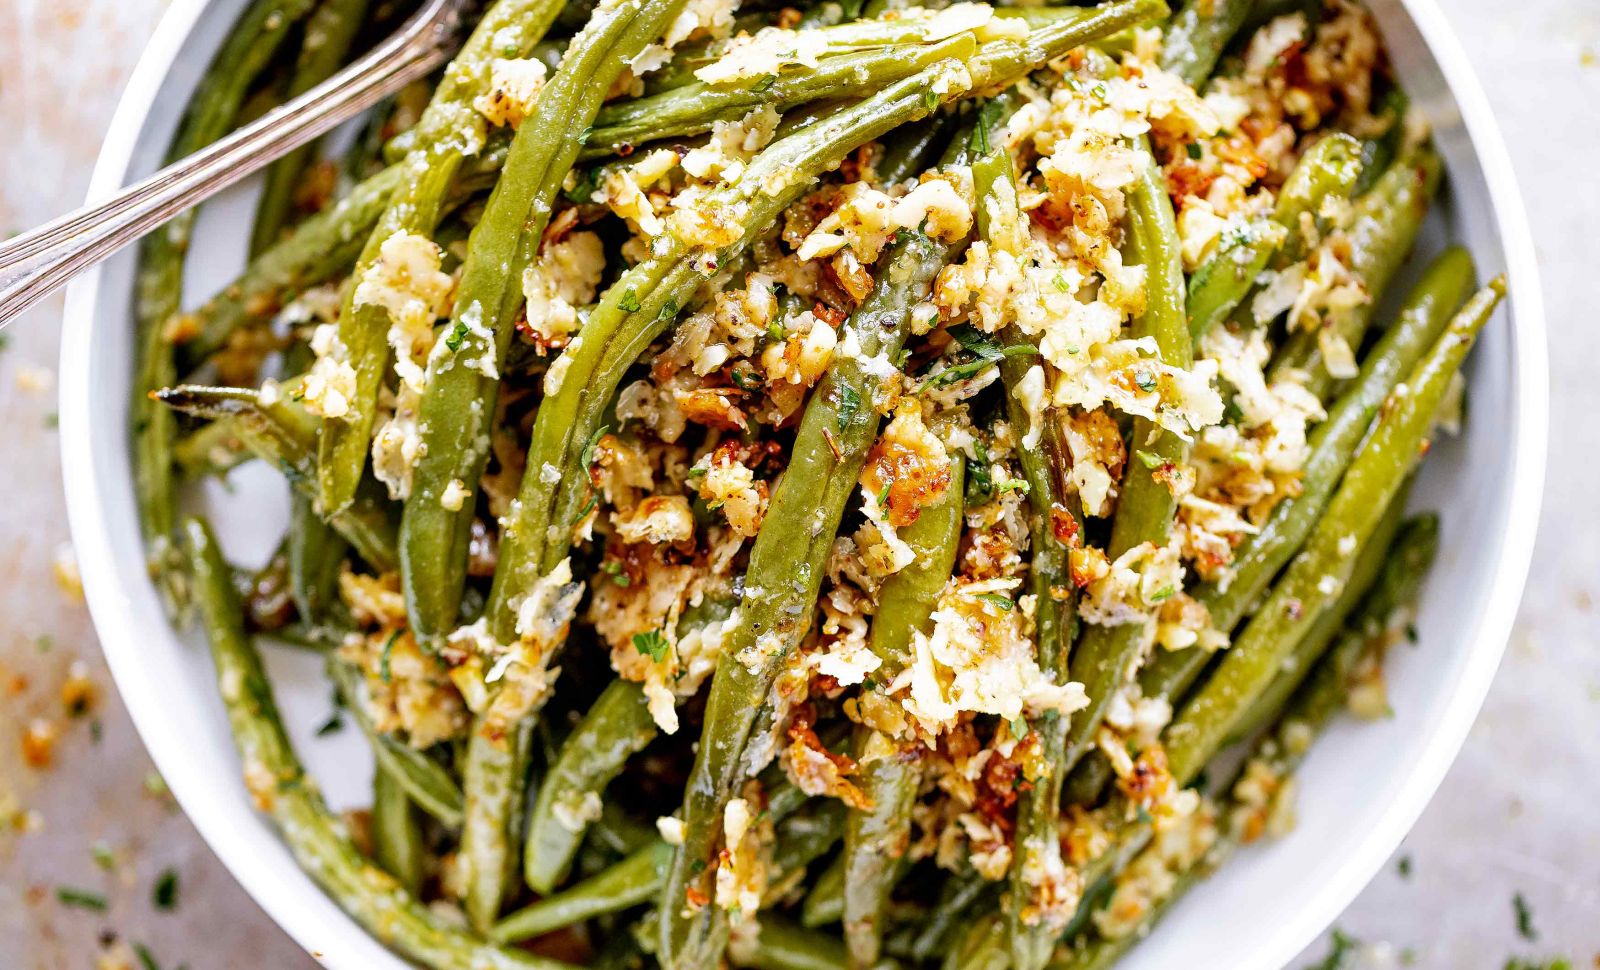 https://www.eatwell101.com/wp-content/uploads/2019/11/Roasted-Garlic-Parmesan-Green-Beans-1600x970.jpg